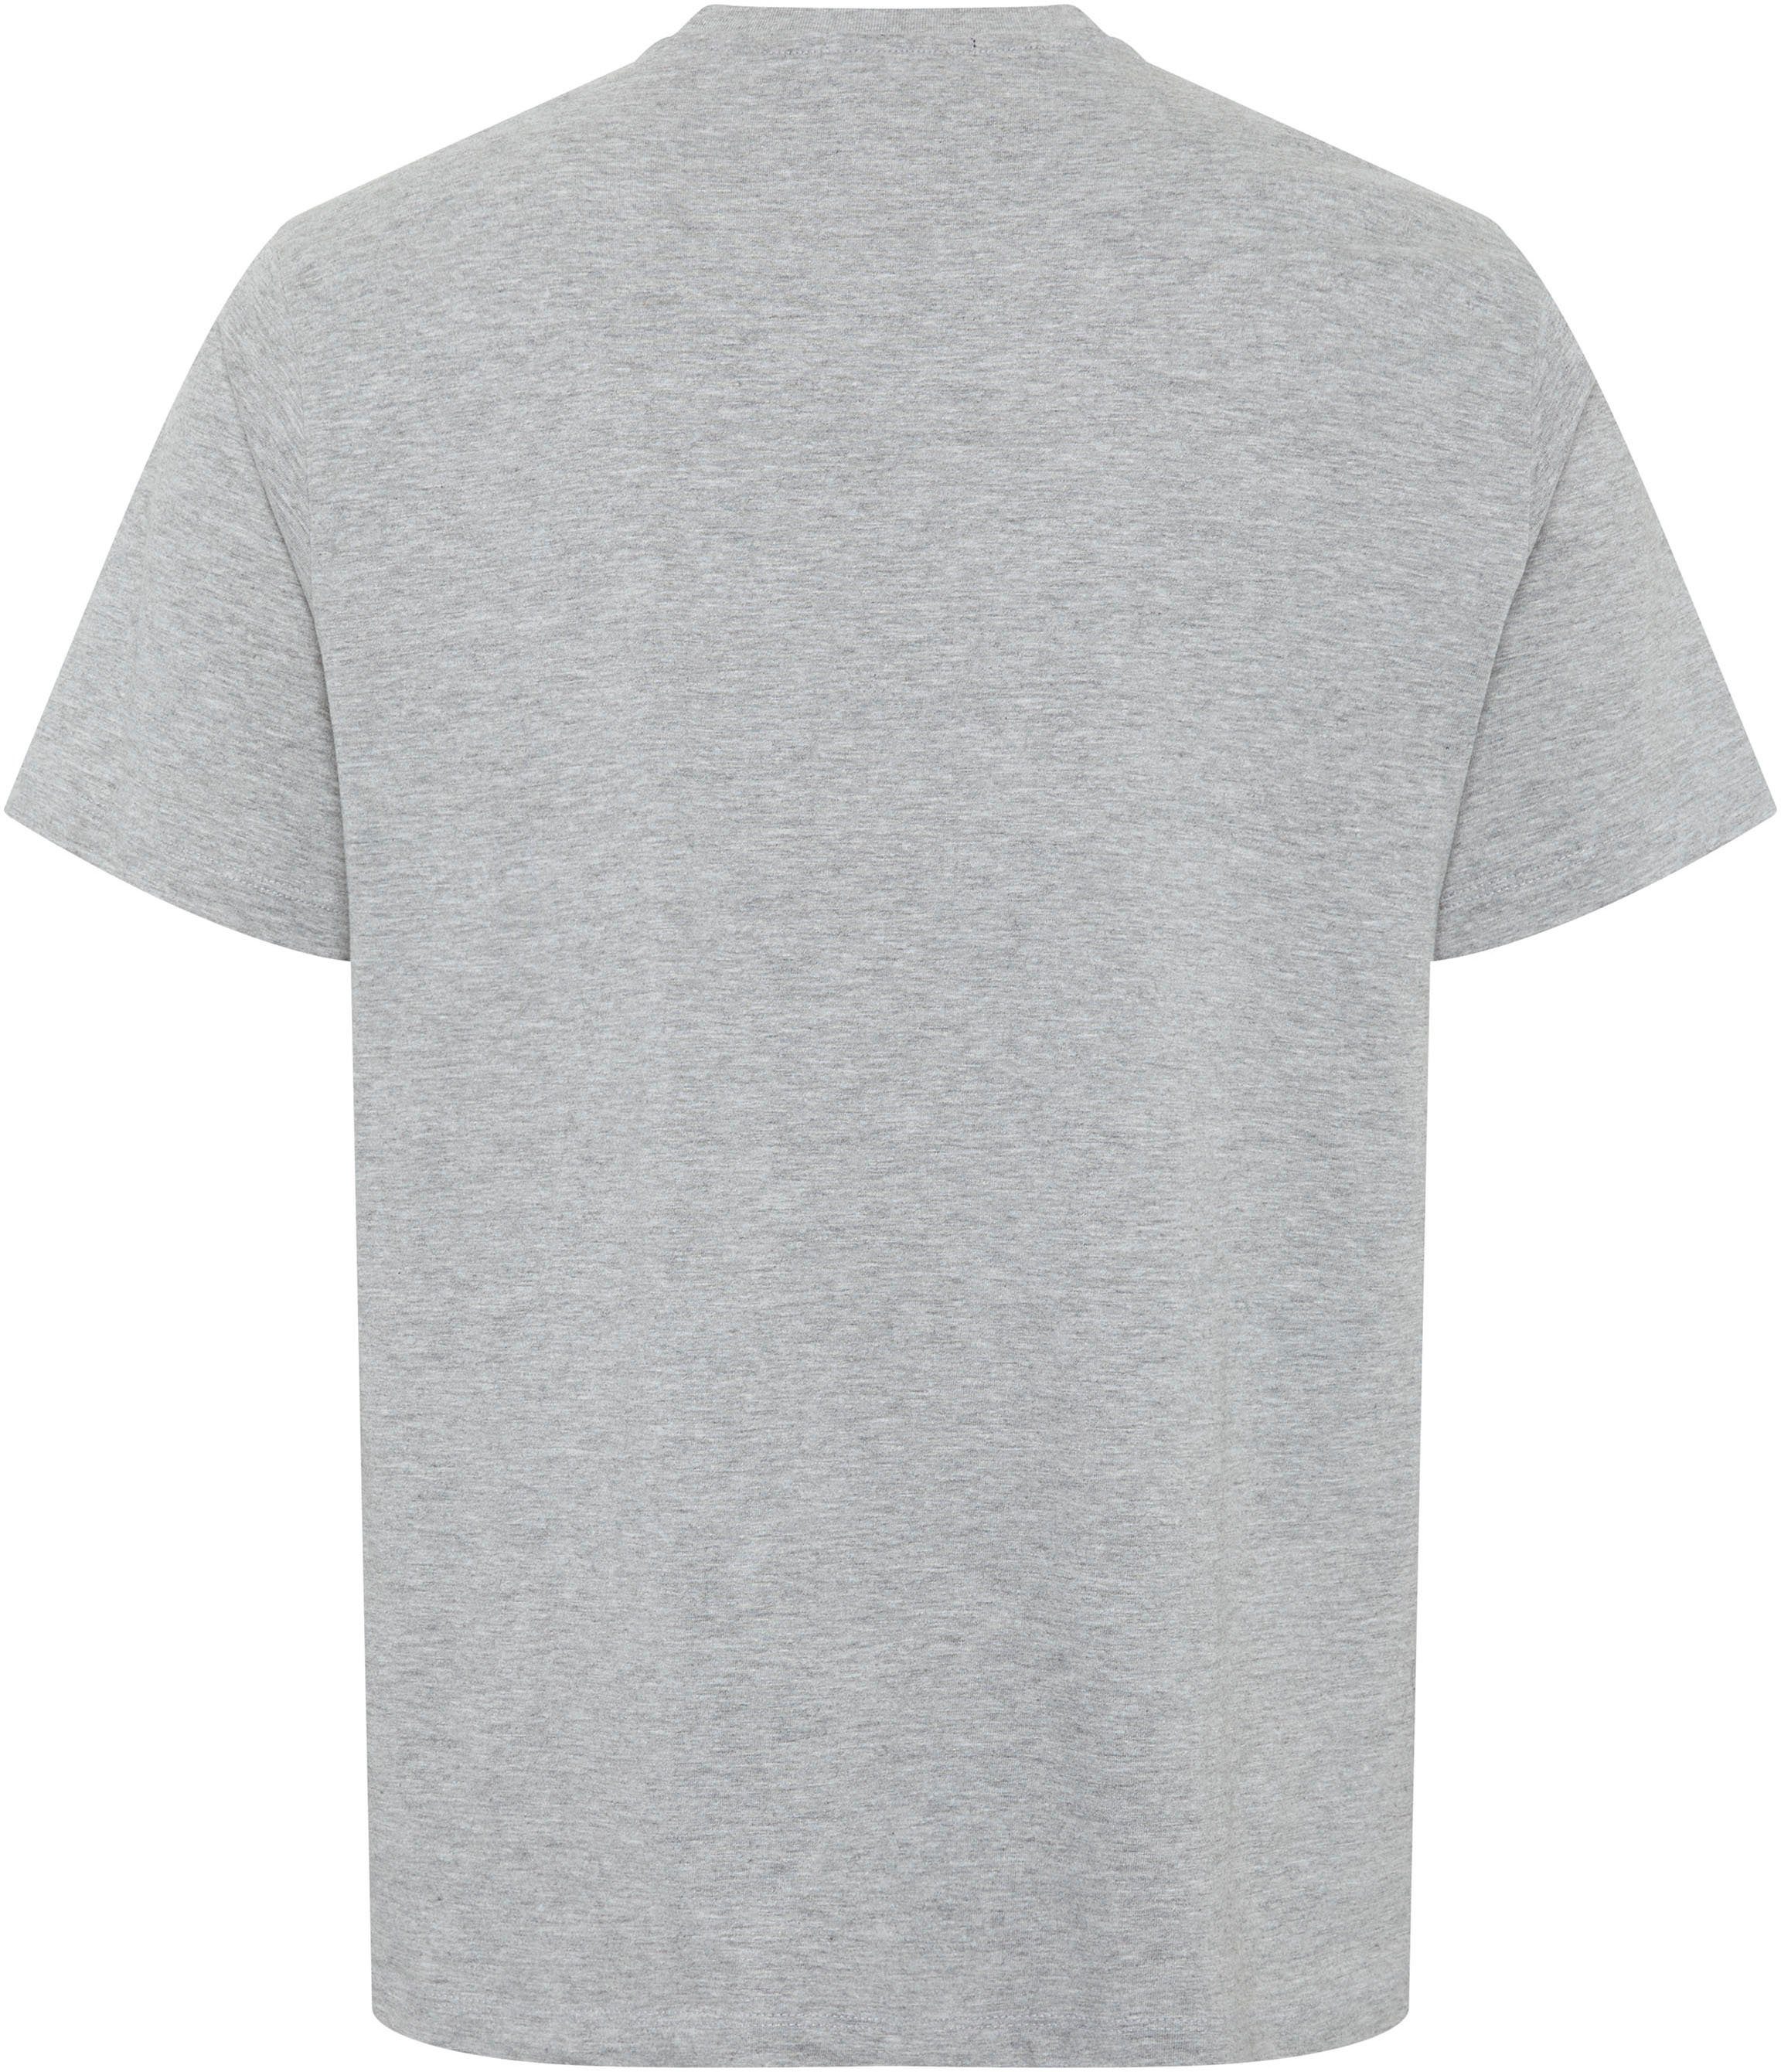 Neutral T-Shirt Chiemsee Gray